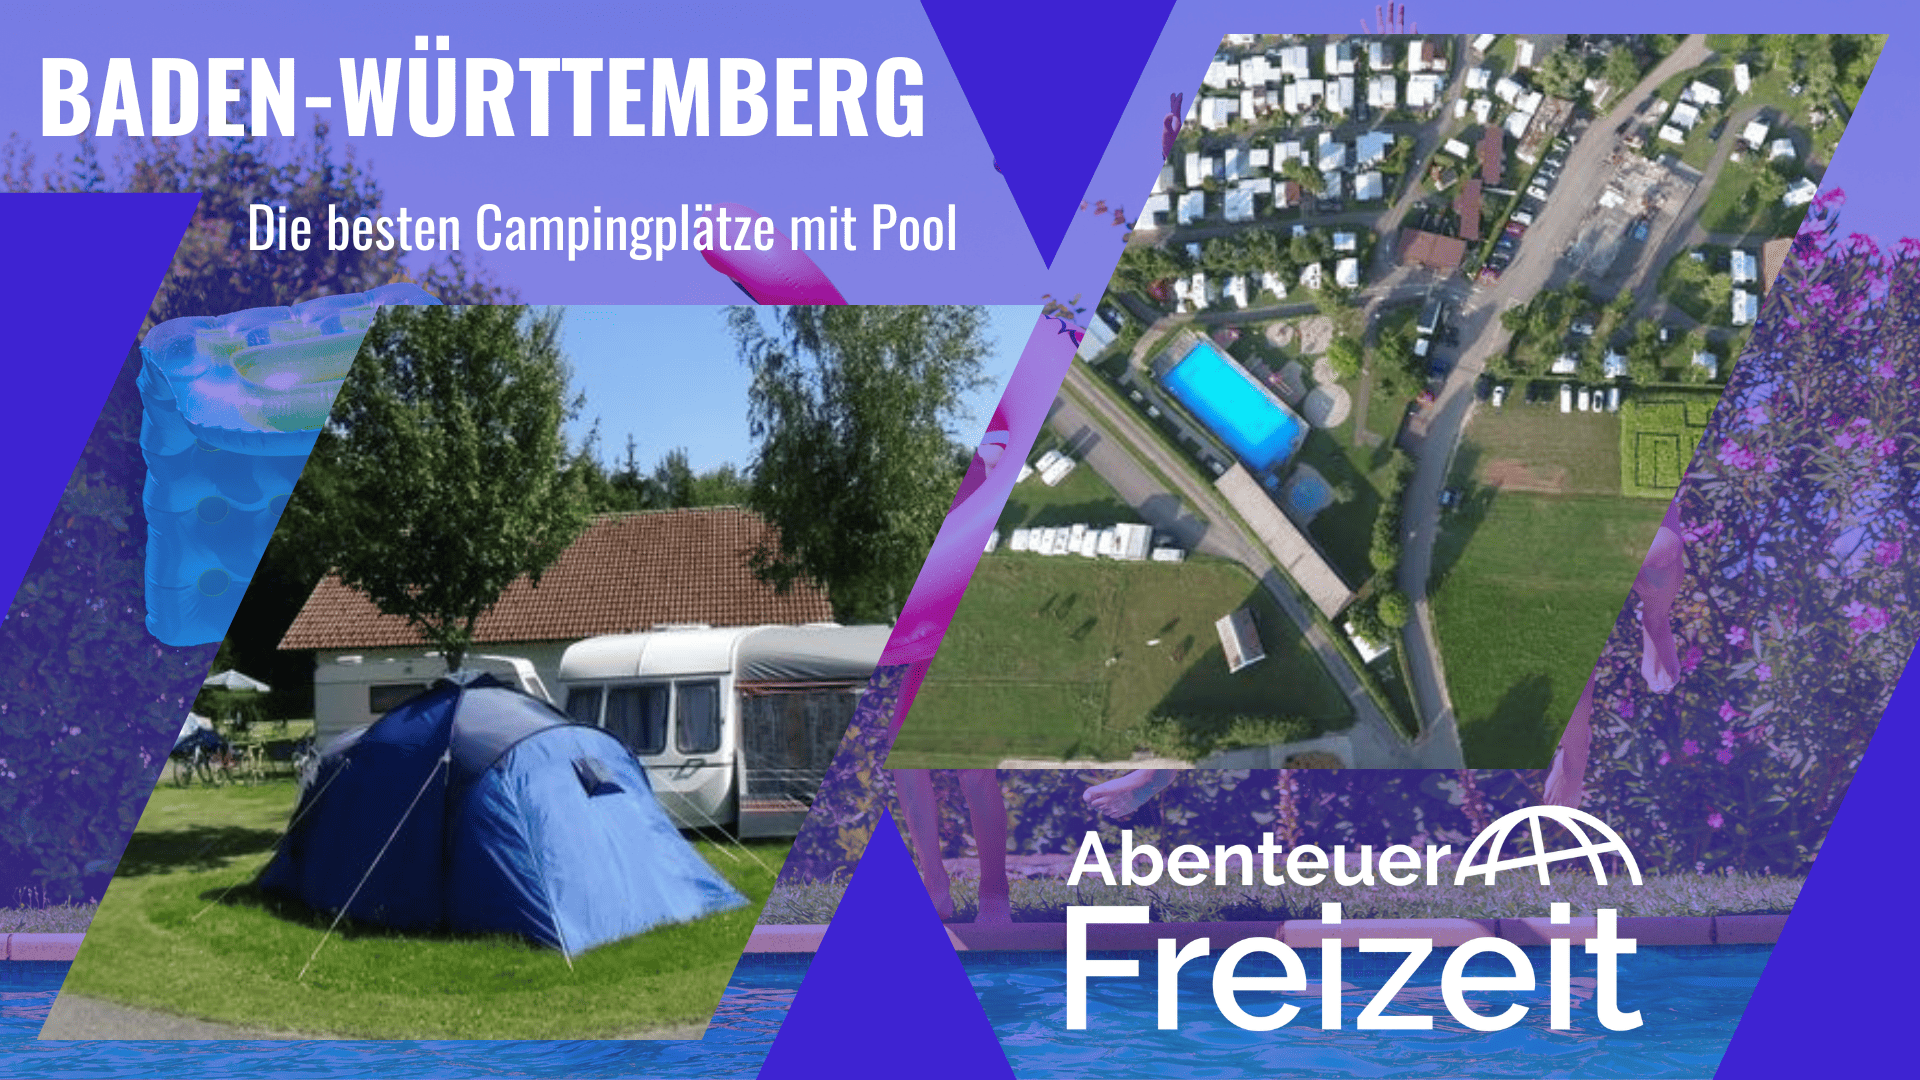 Campingplätze mit Pool in Baden-Württemberg